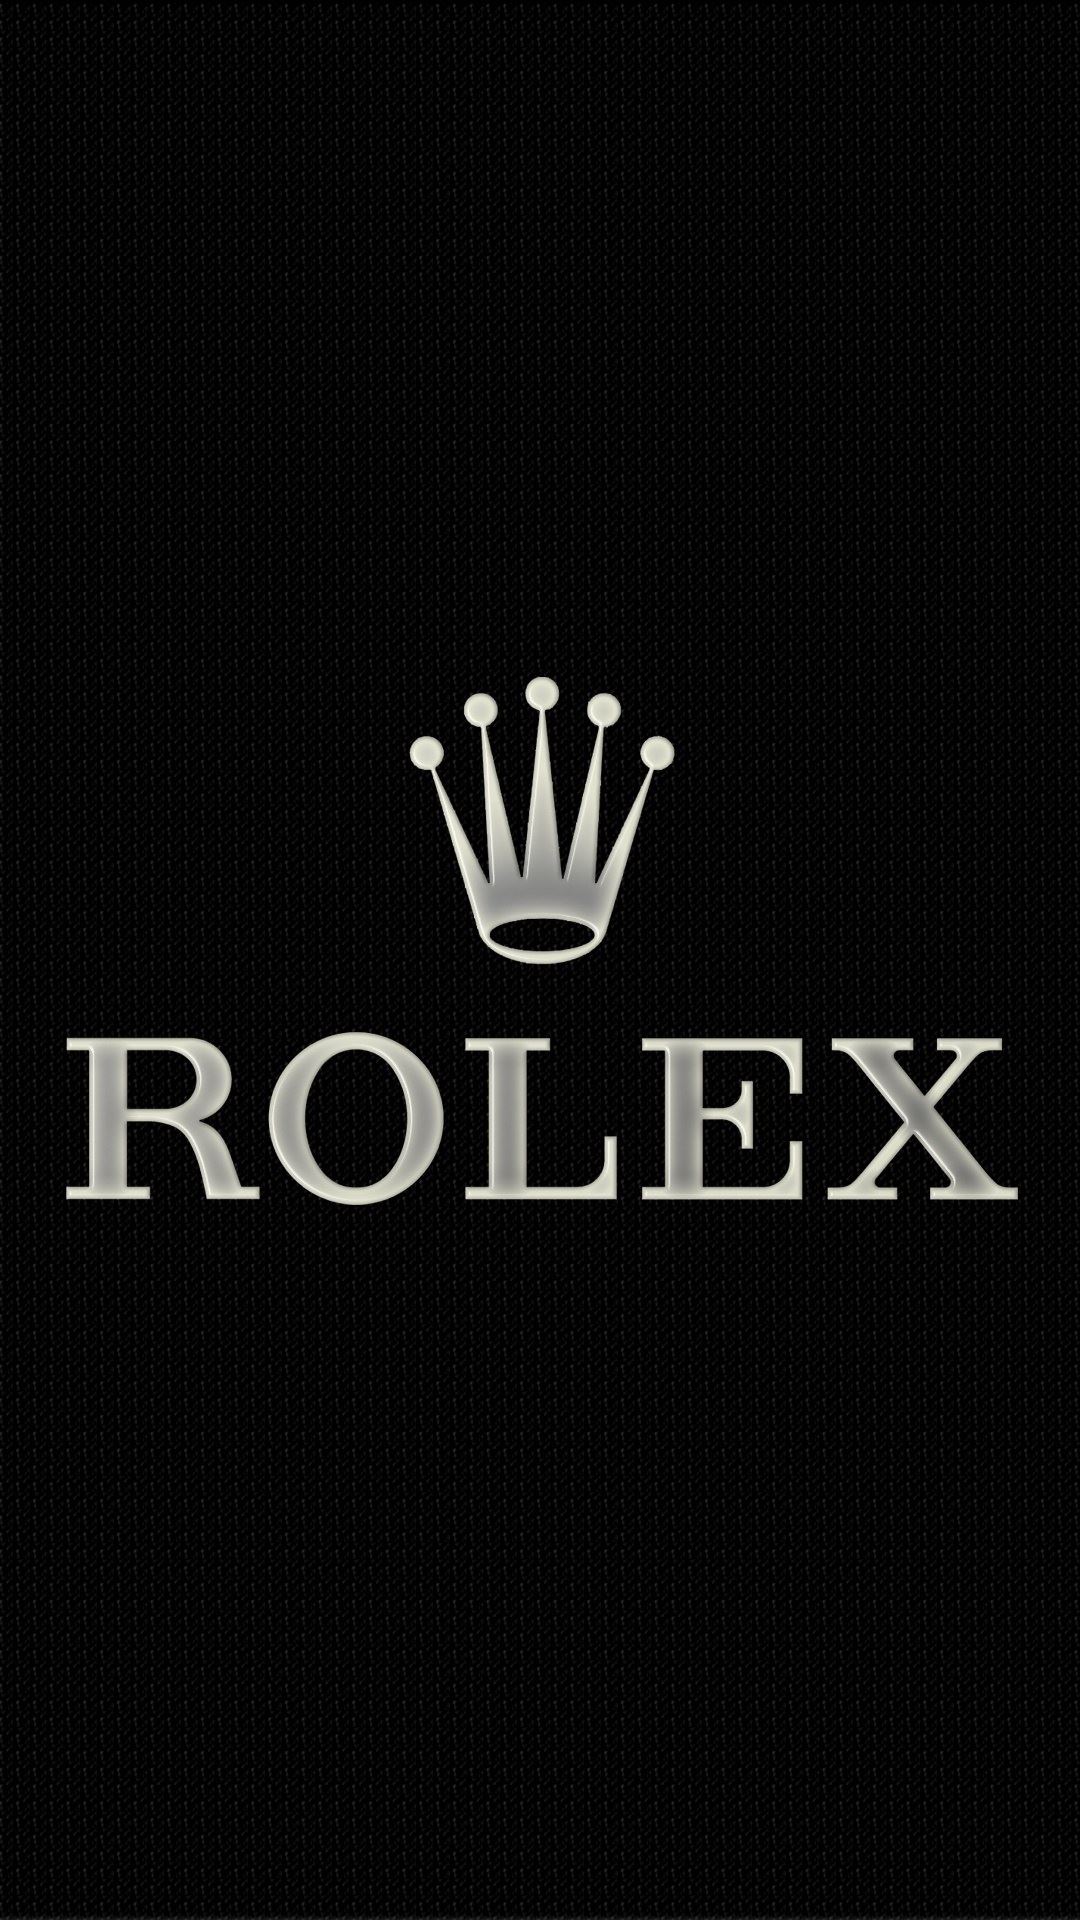 PBATS Announces Winner of 2015 Rolex Raffle - PBATS.com